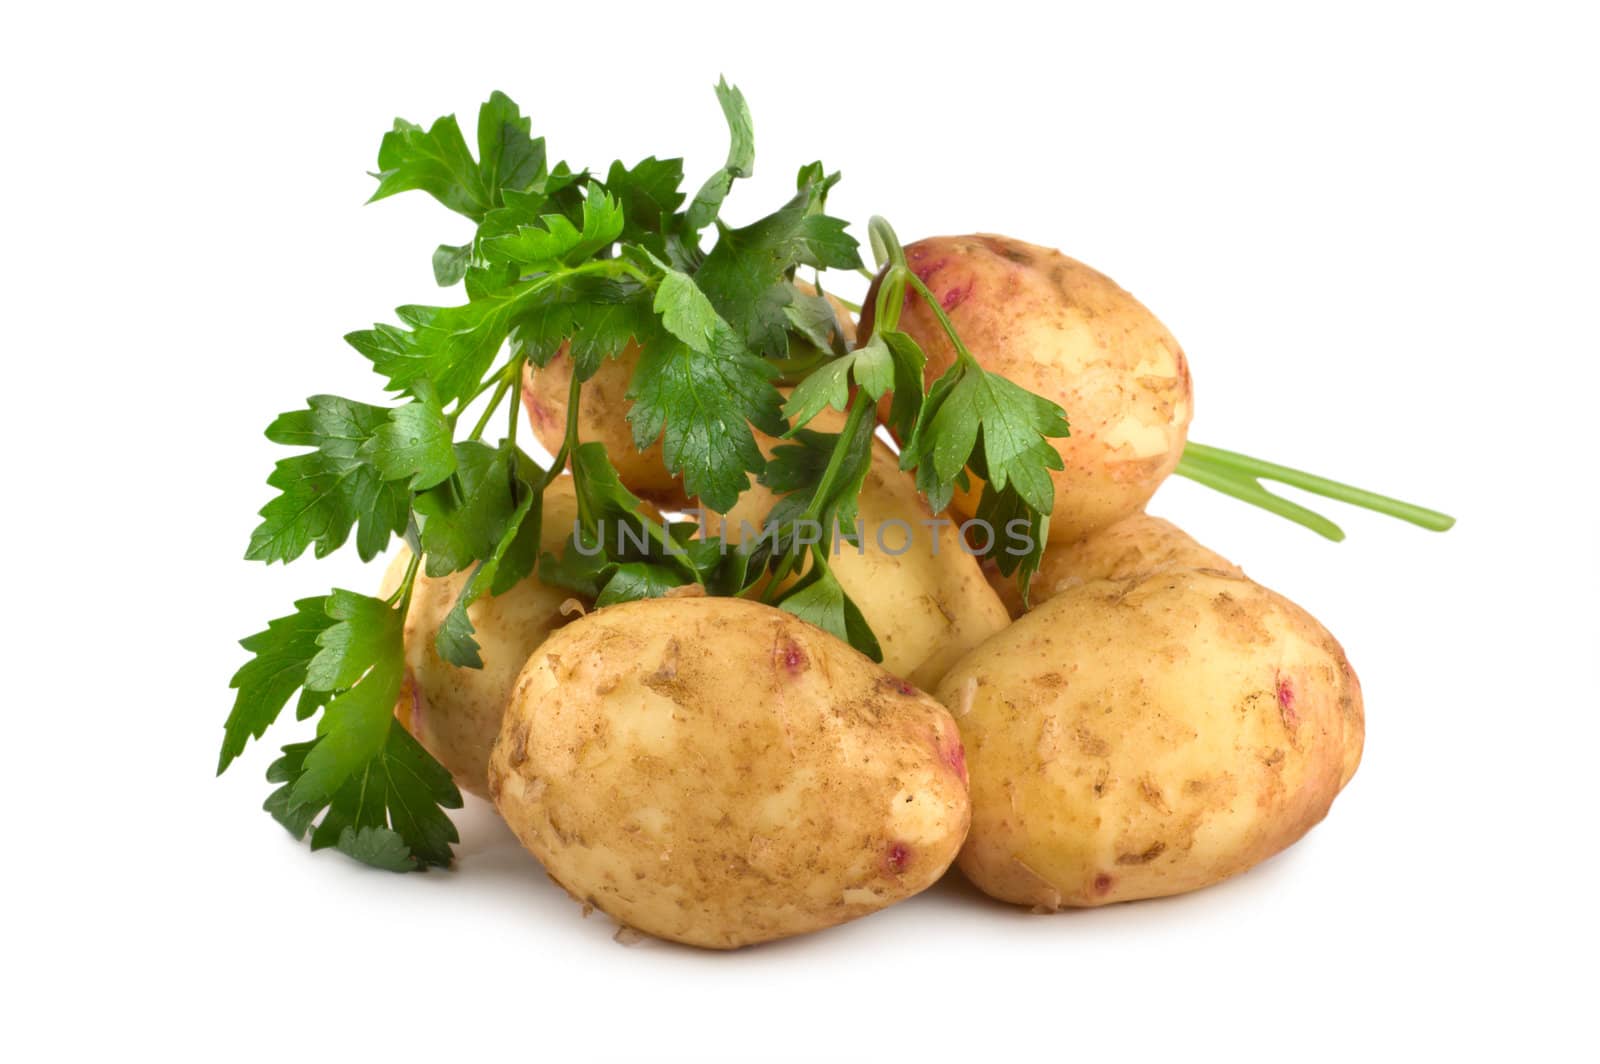 Potato isolated on a white background